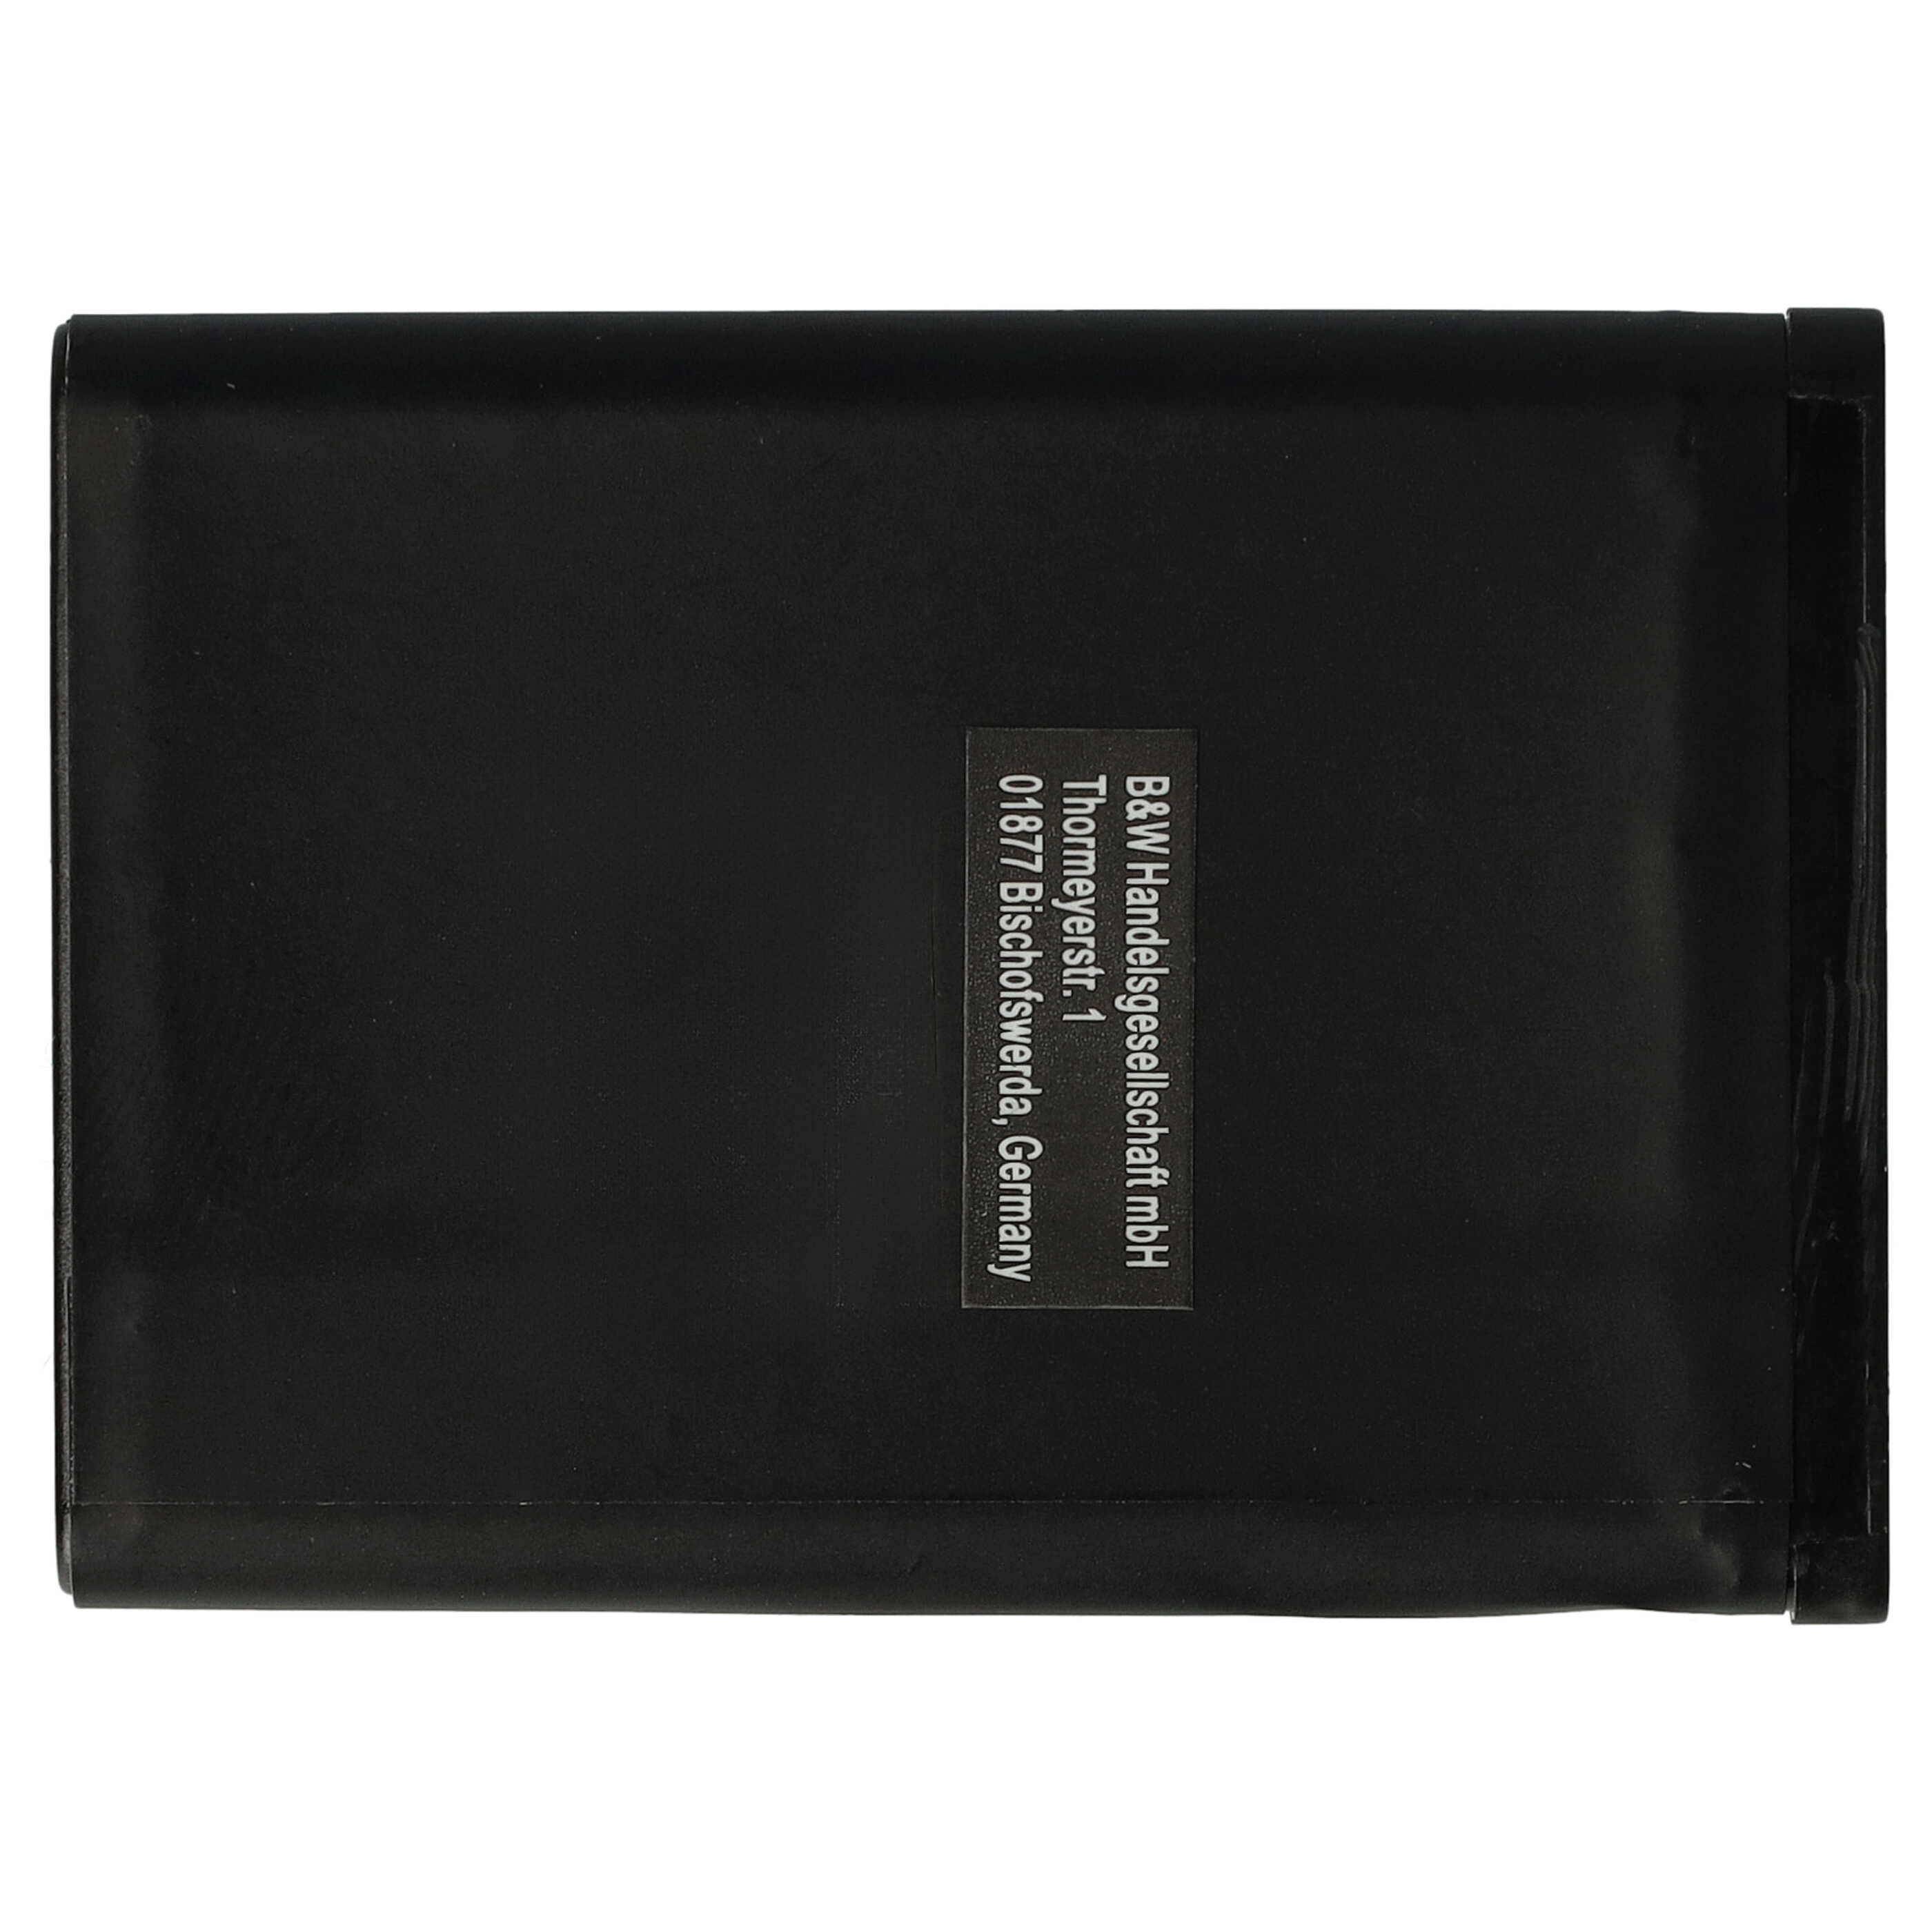 Akumulator bateria do telefonu smartfona zam. Sony-Ericsson BST-37 - 900mAh, 3,7V, Li-Ion